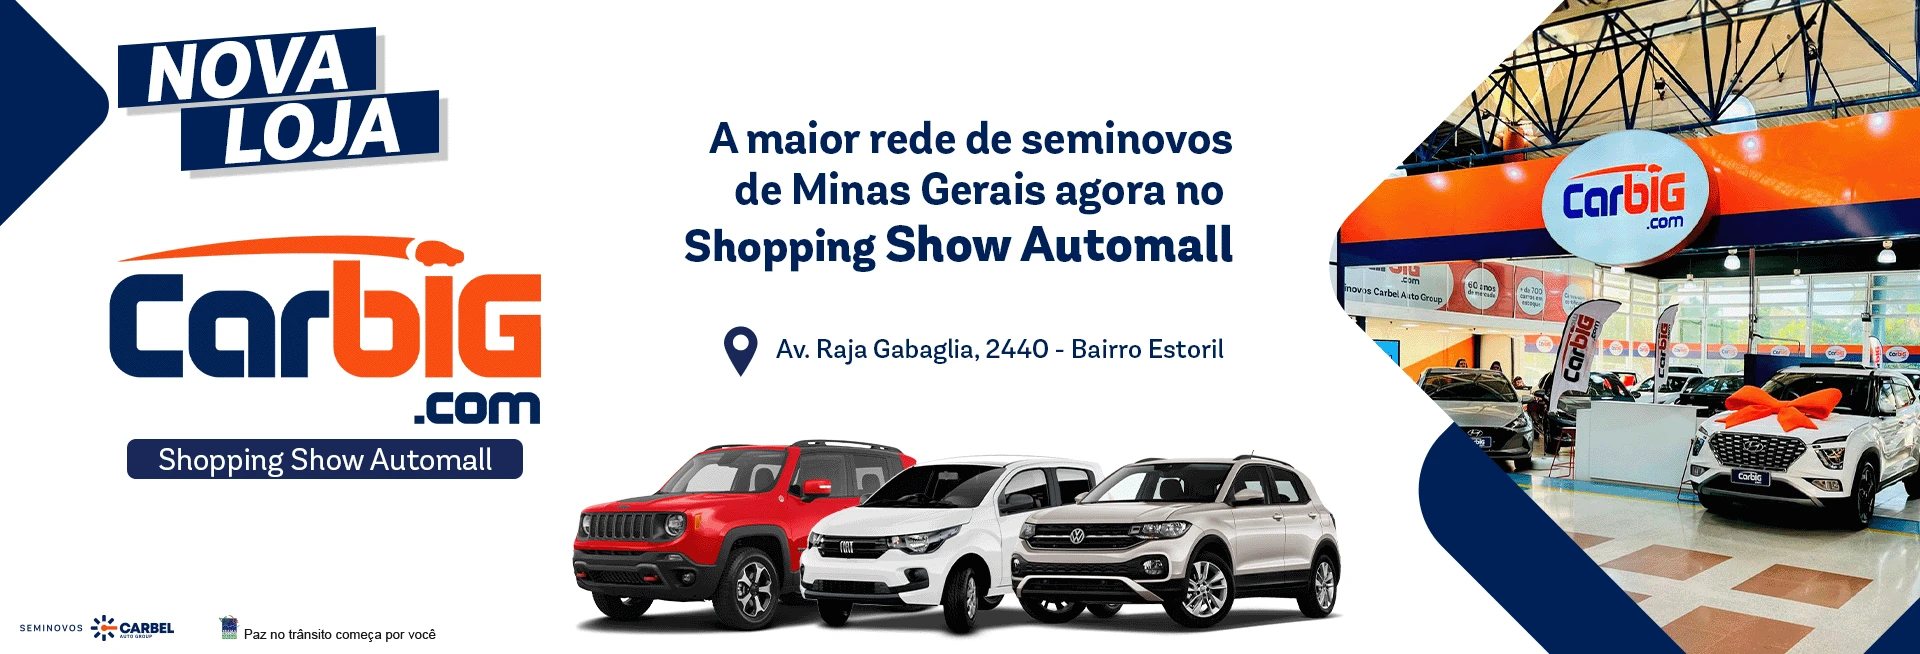 Nova loja - Show Automall